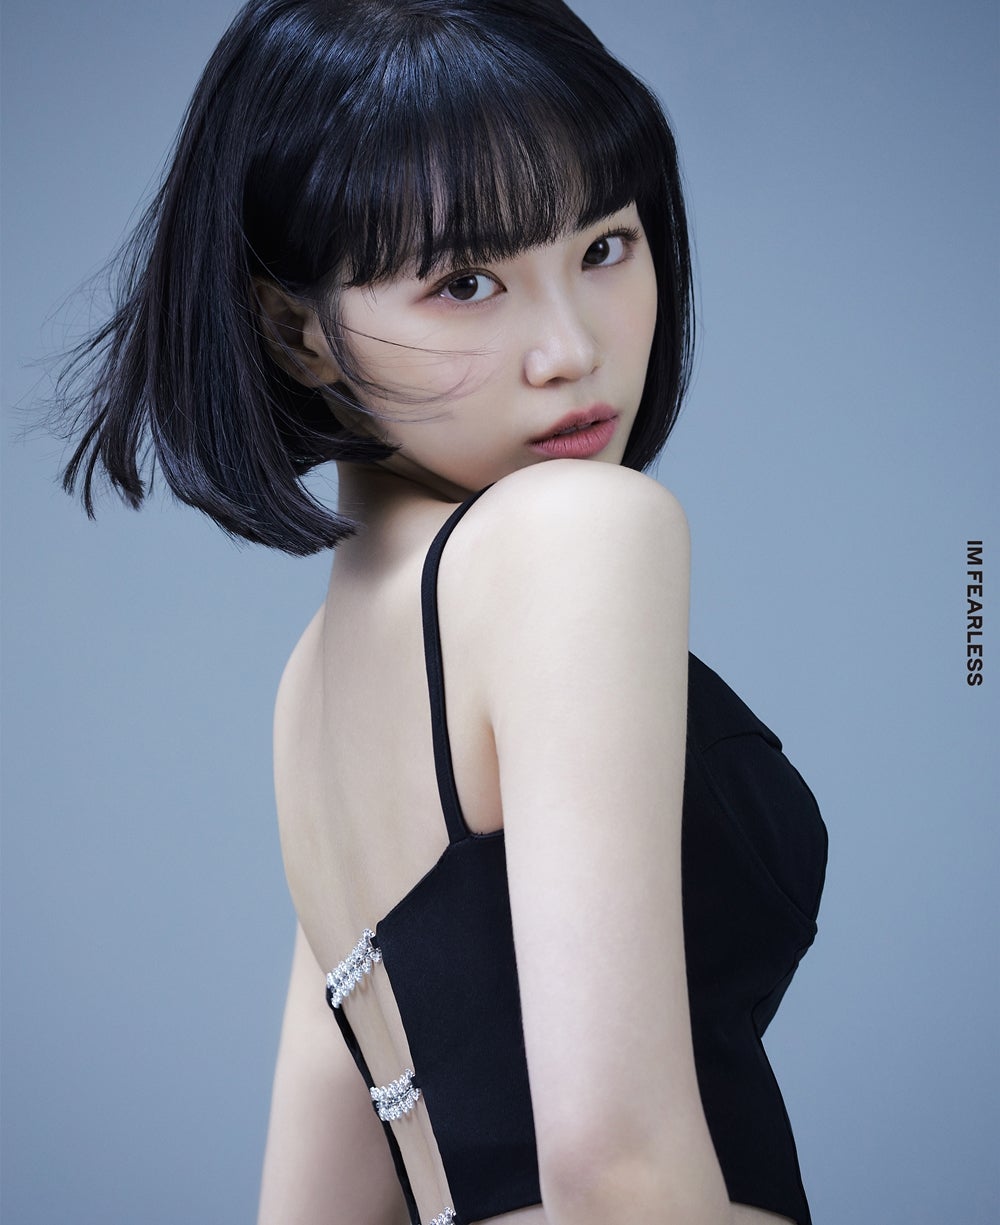 LE SSERAFIM ルセラ チェウォン 直筆サイン LINE MUSIC - K-POP/アジア